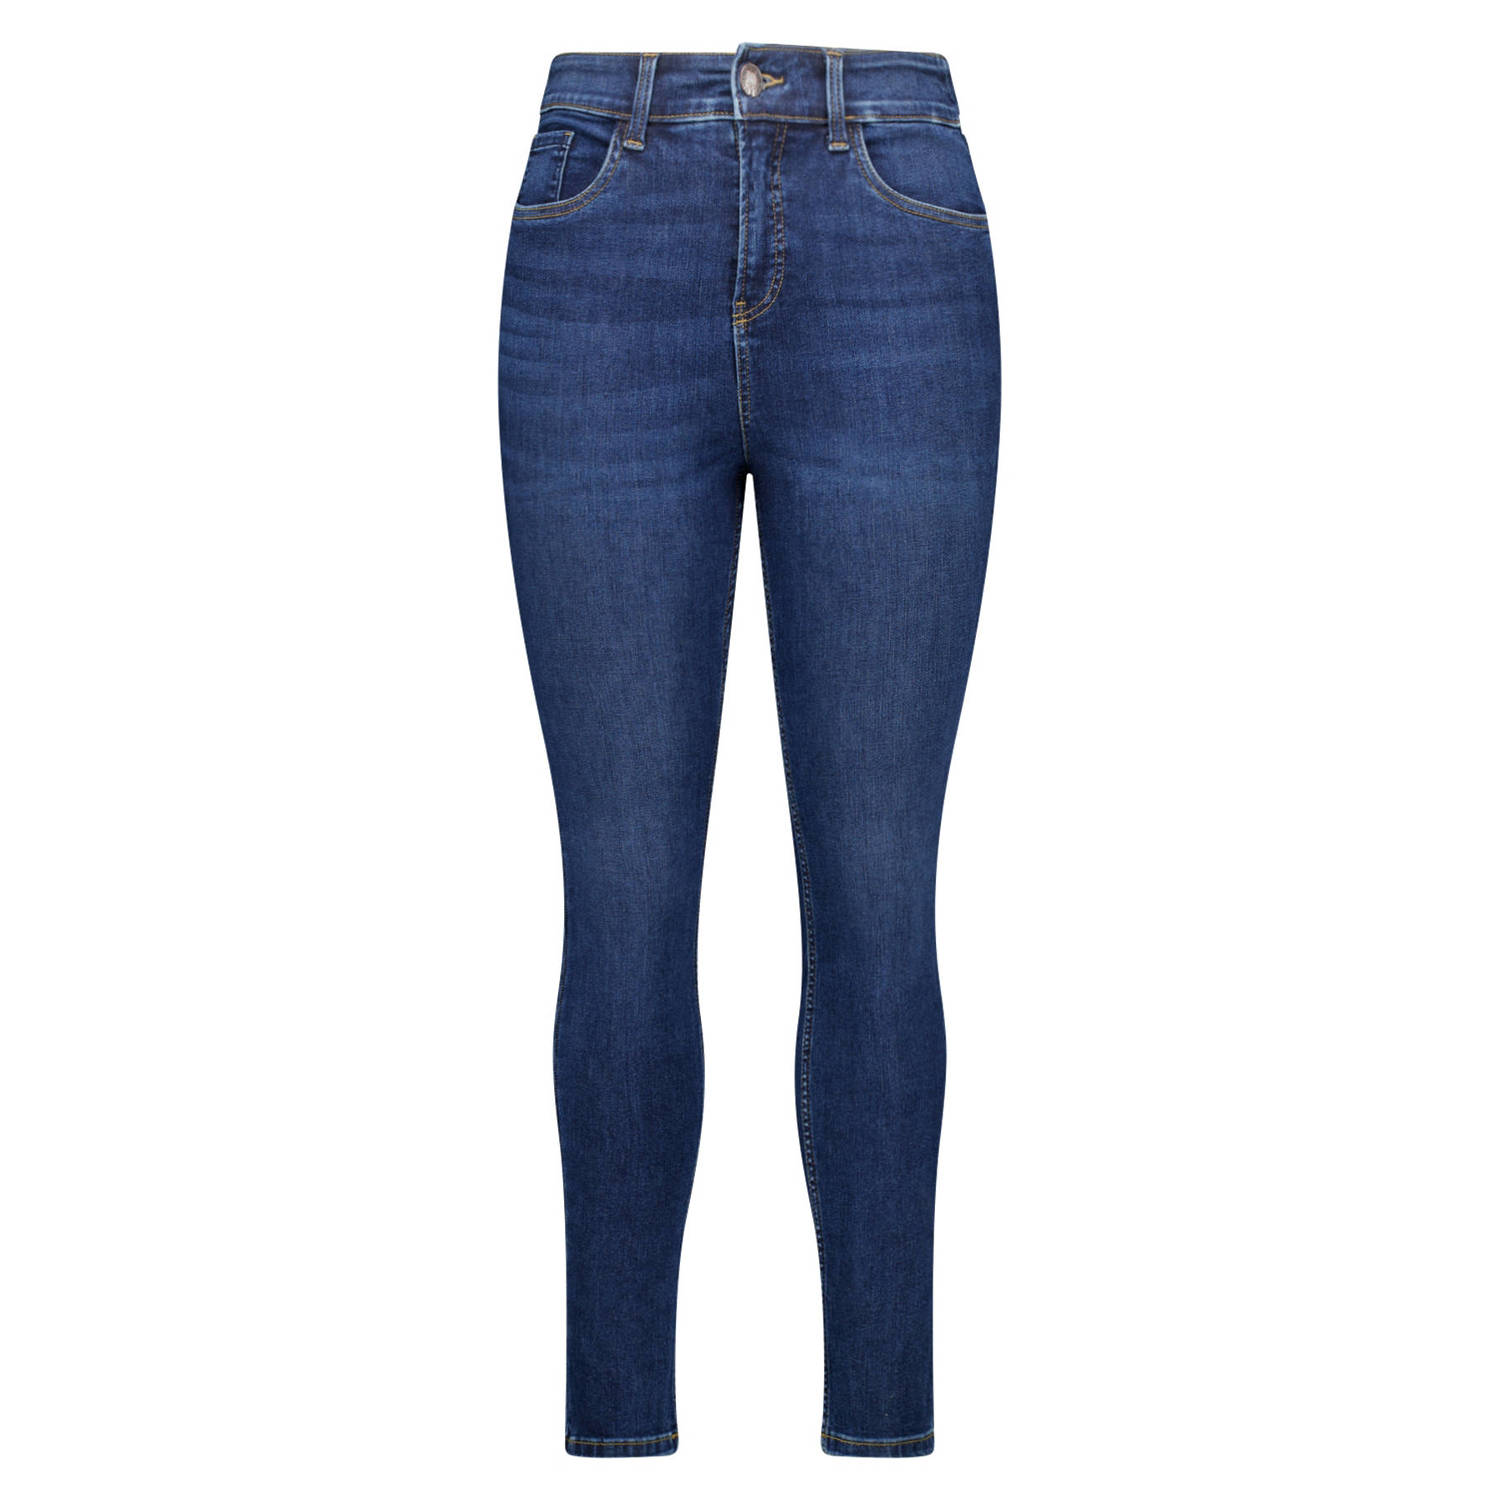 MS Mode high waist skinny jeans dark blue denim